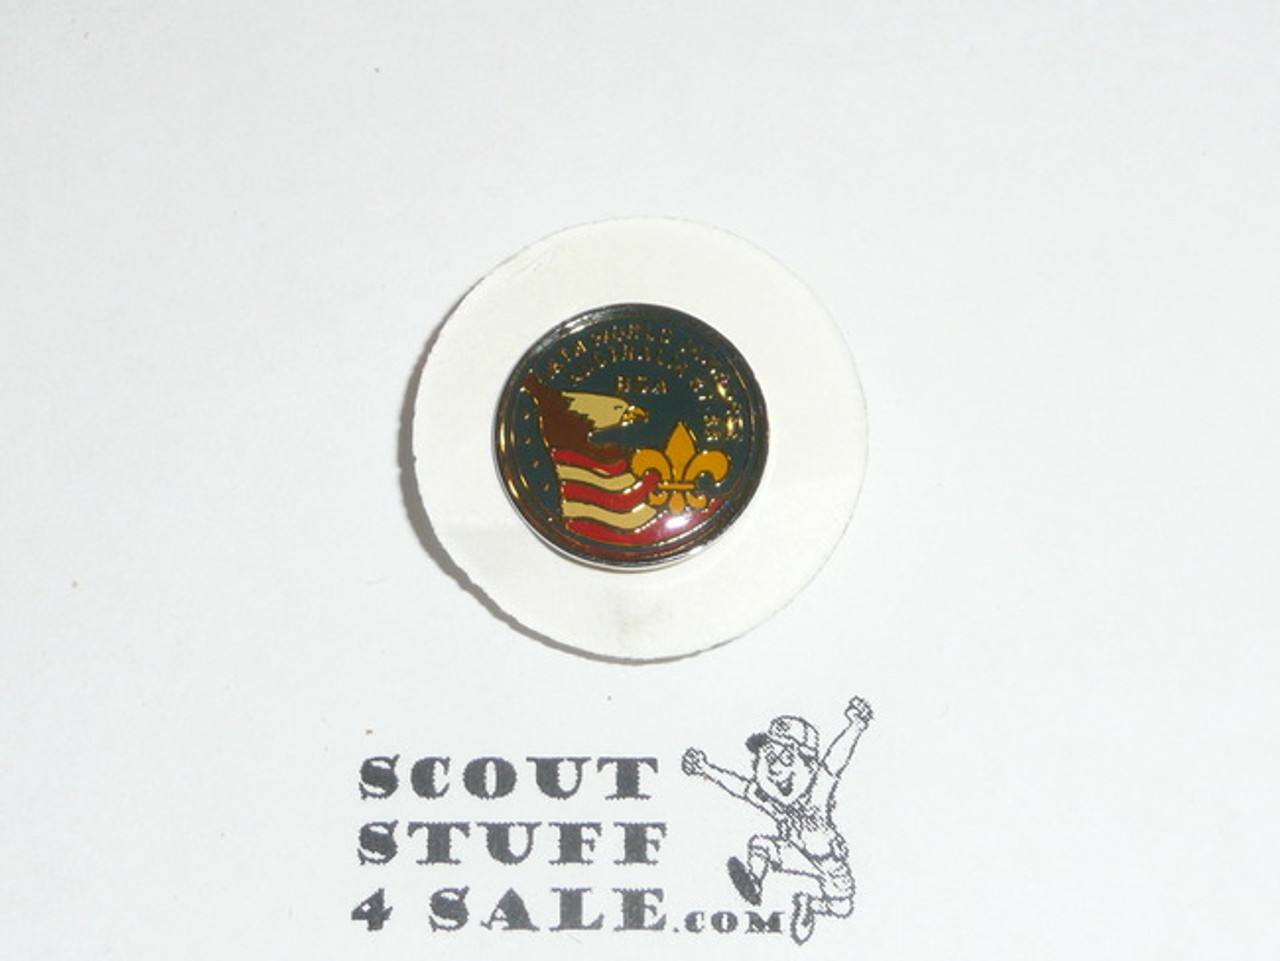 1987/1988 USA Contingent Pin, Small Version